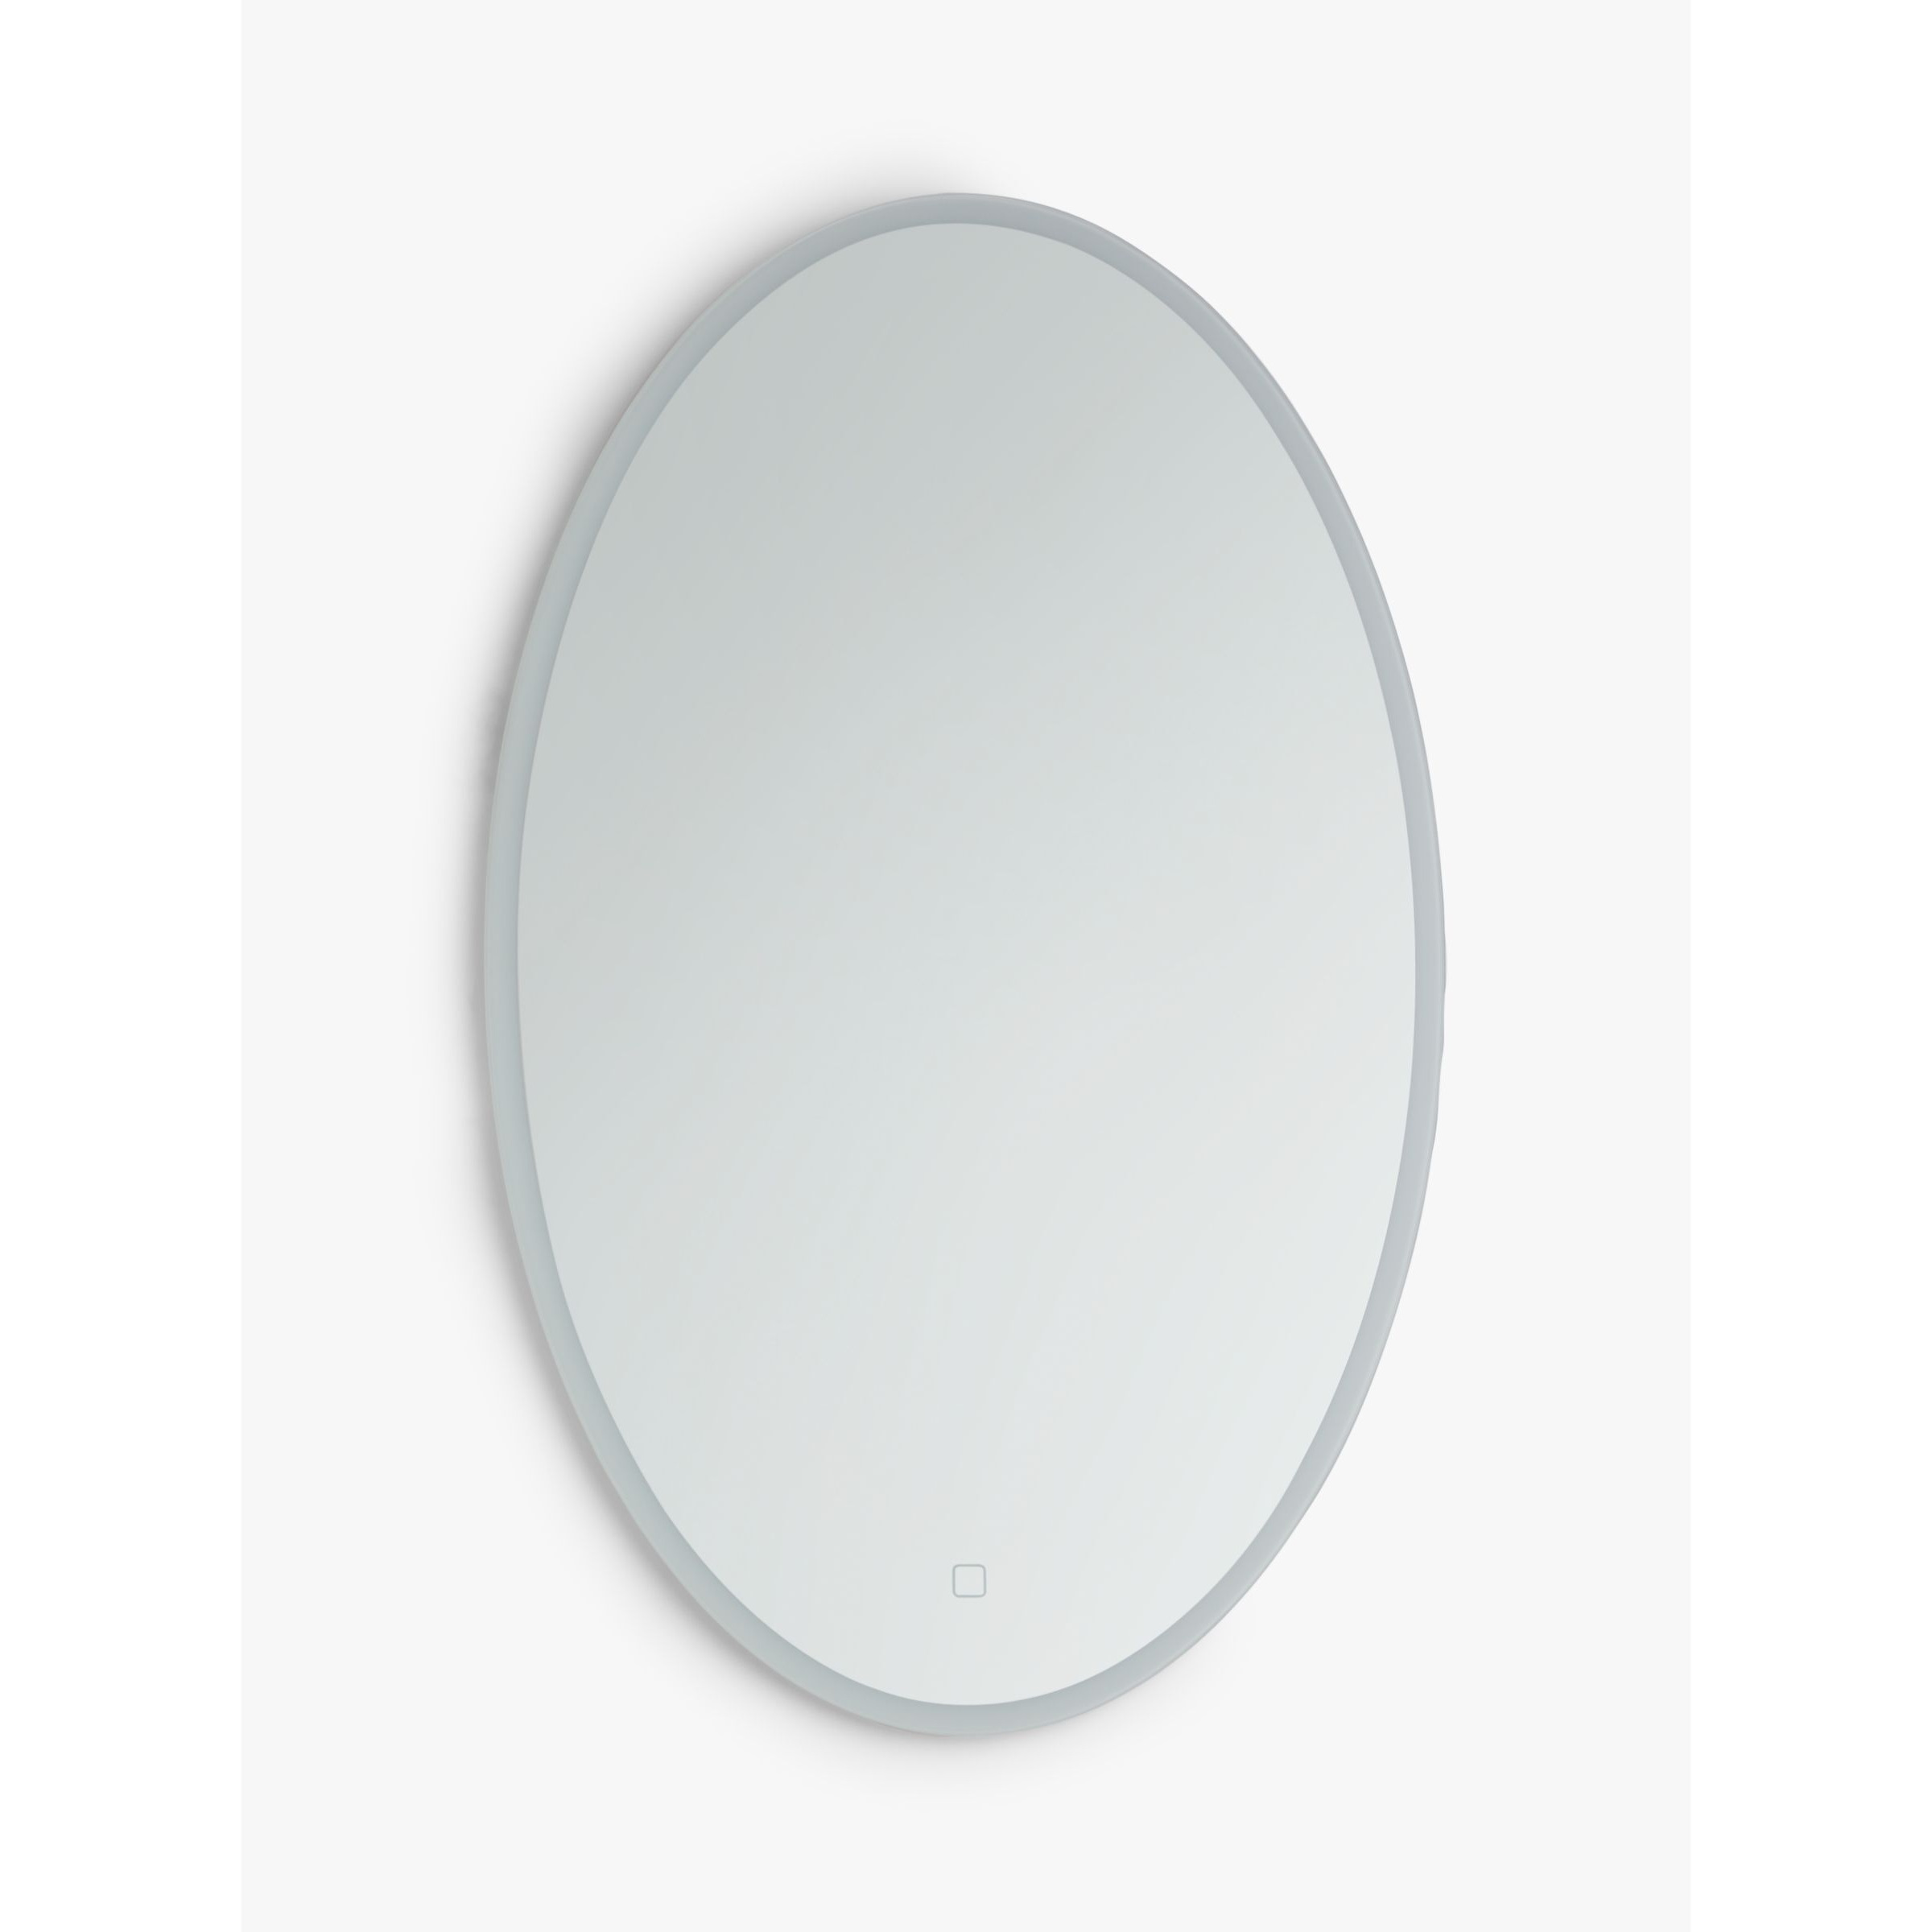 John Lewis Aura Wall Mounted Illuminated Bathroom Mirror, Oval - image 1